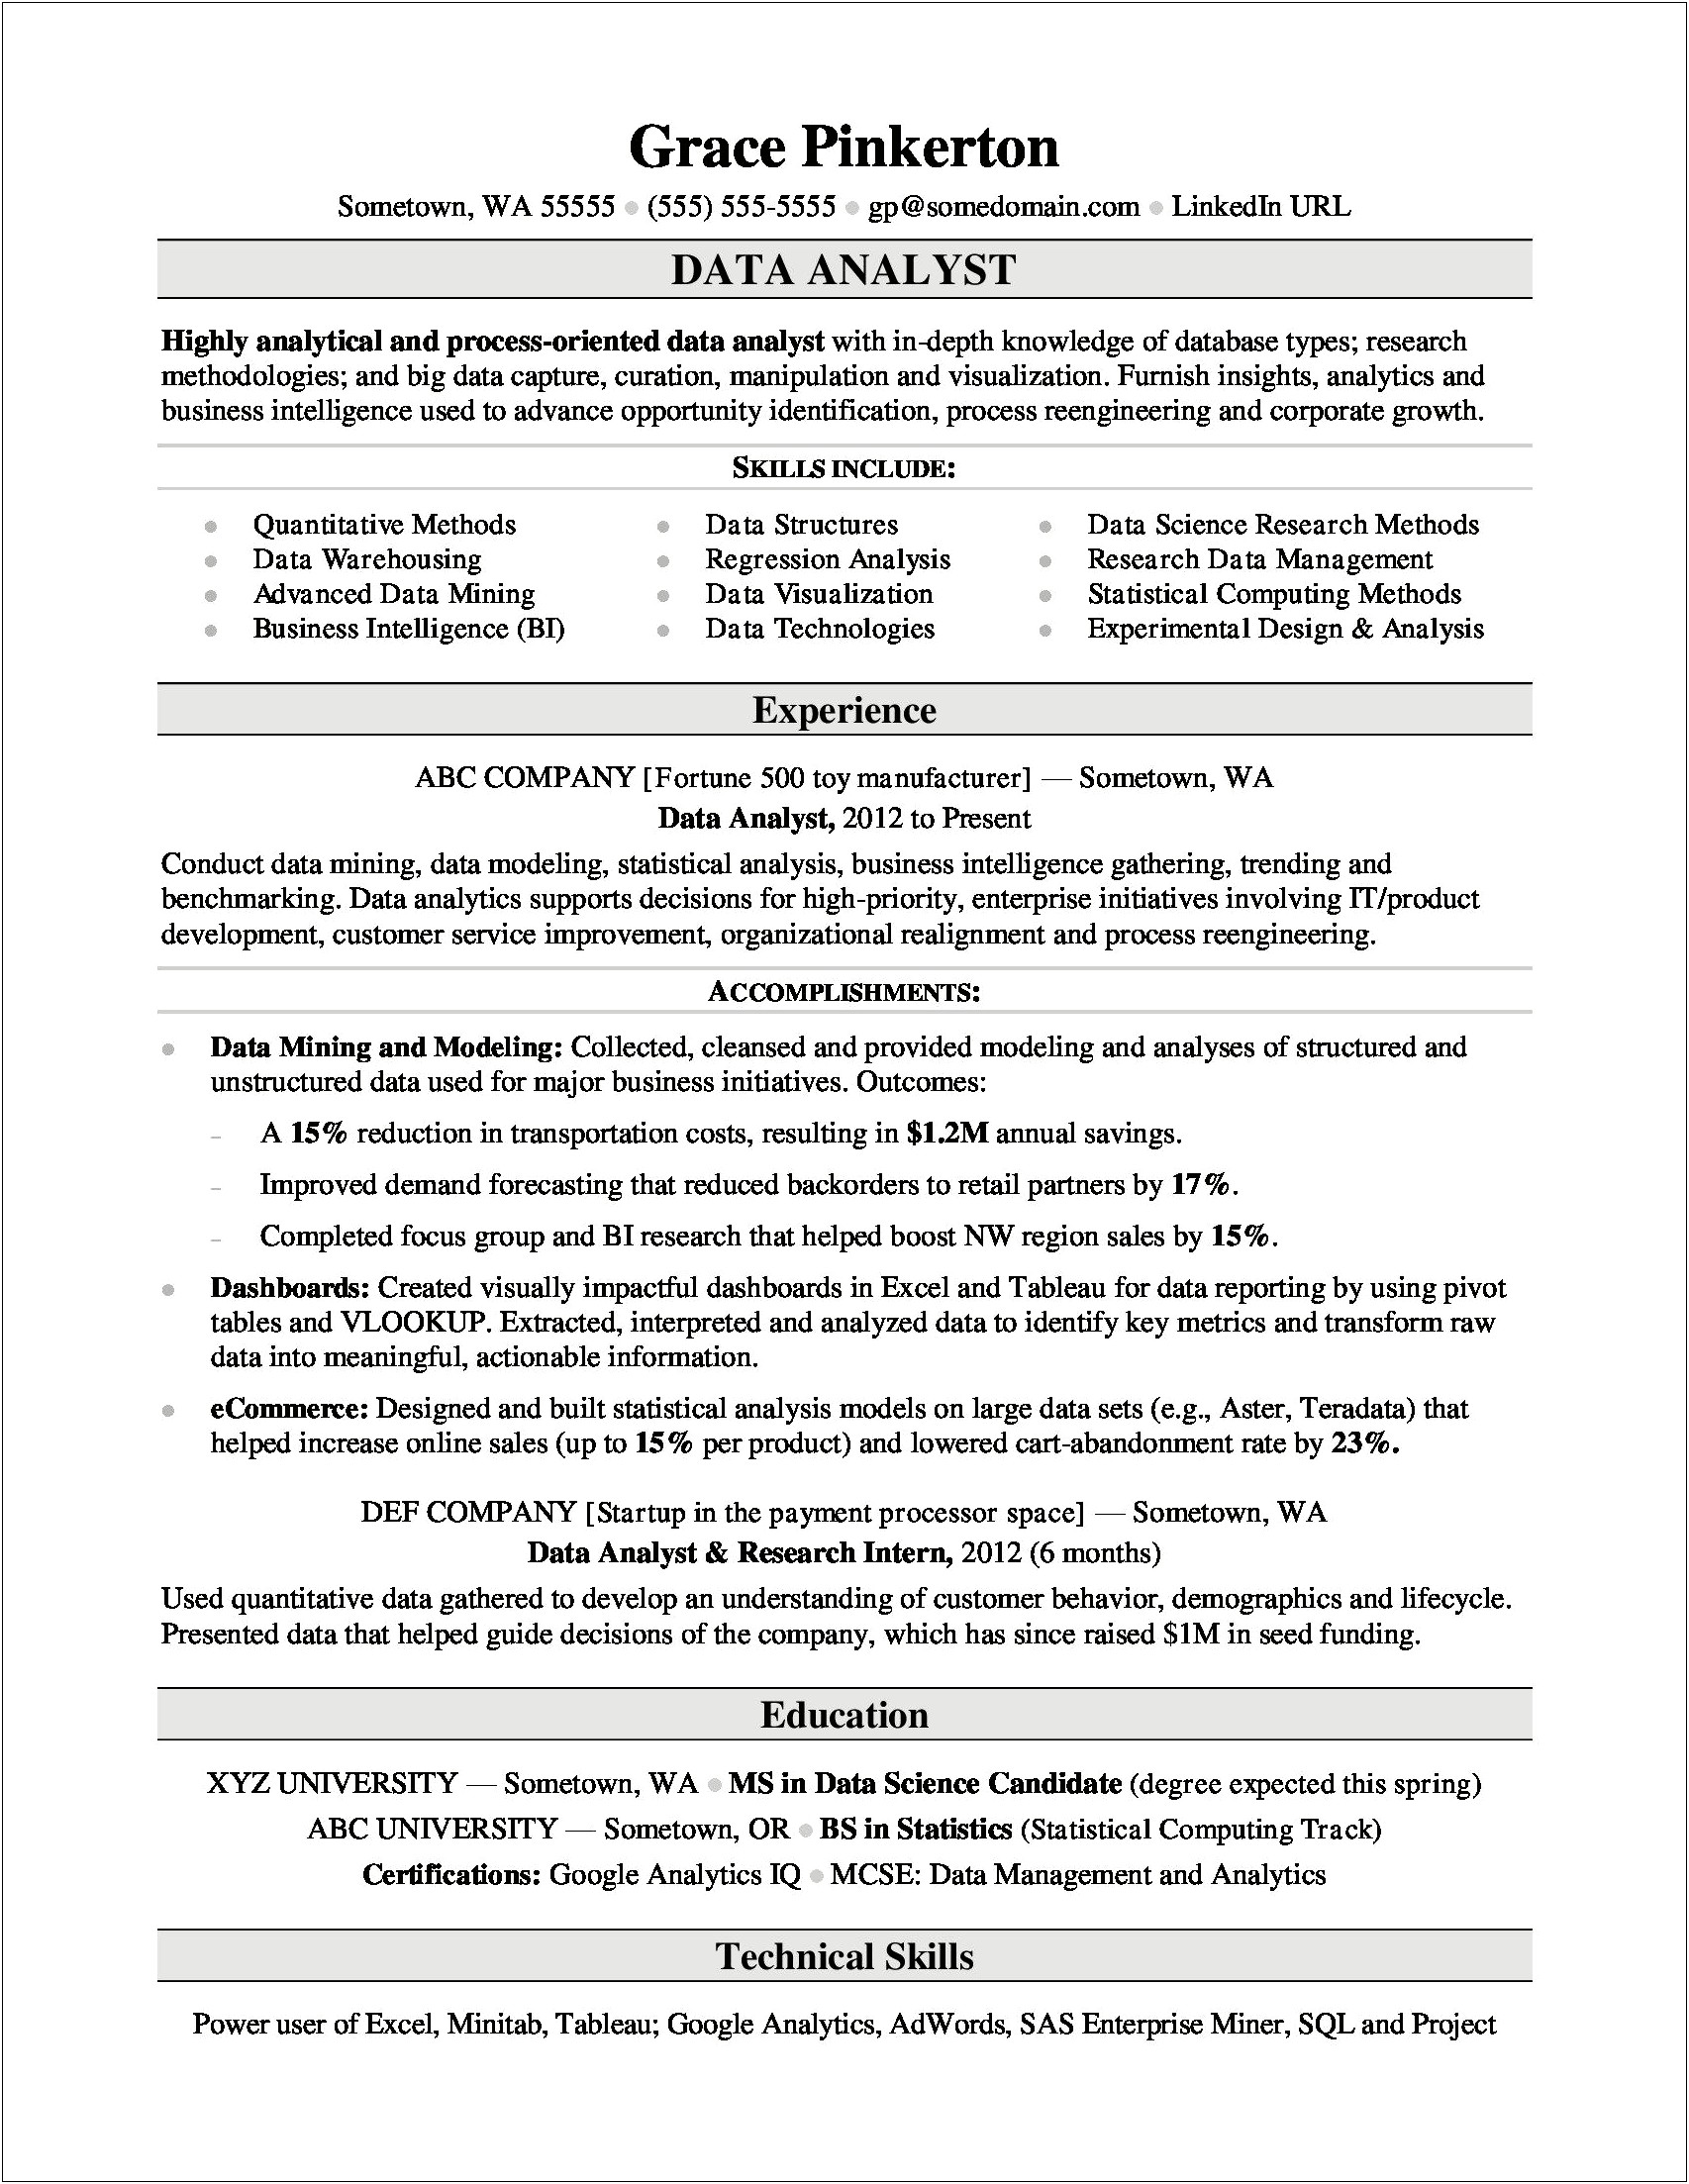 Sample Resume With Linkedin Address